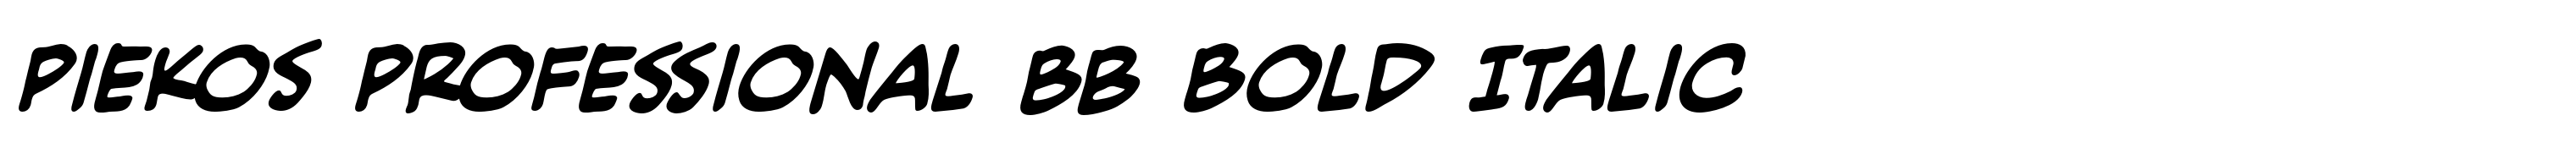 Piekos Professional BB Bold Italic